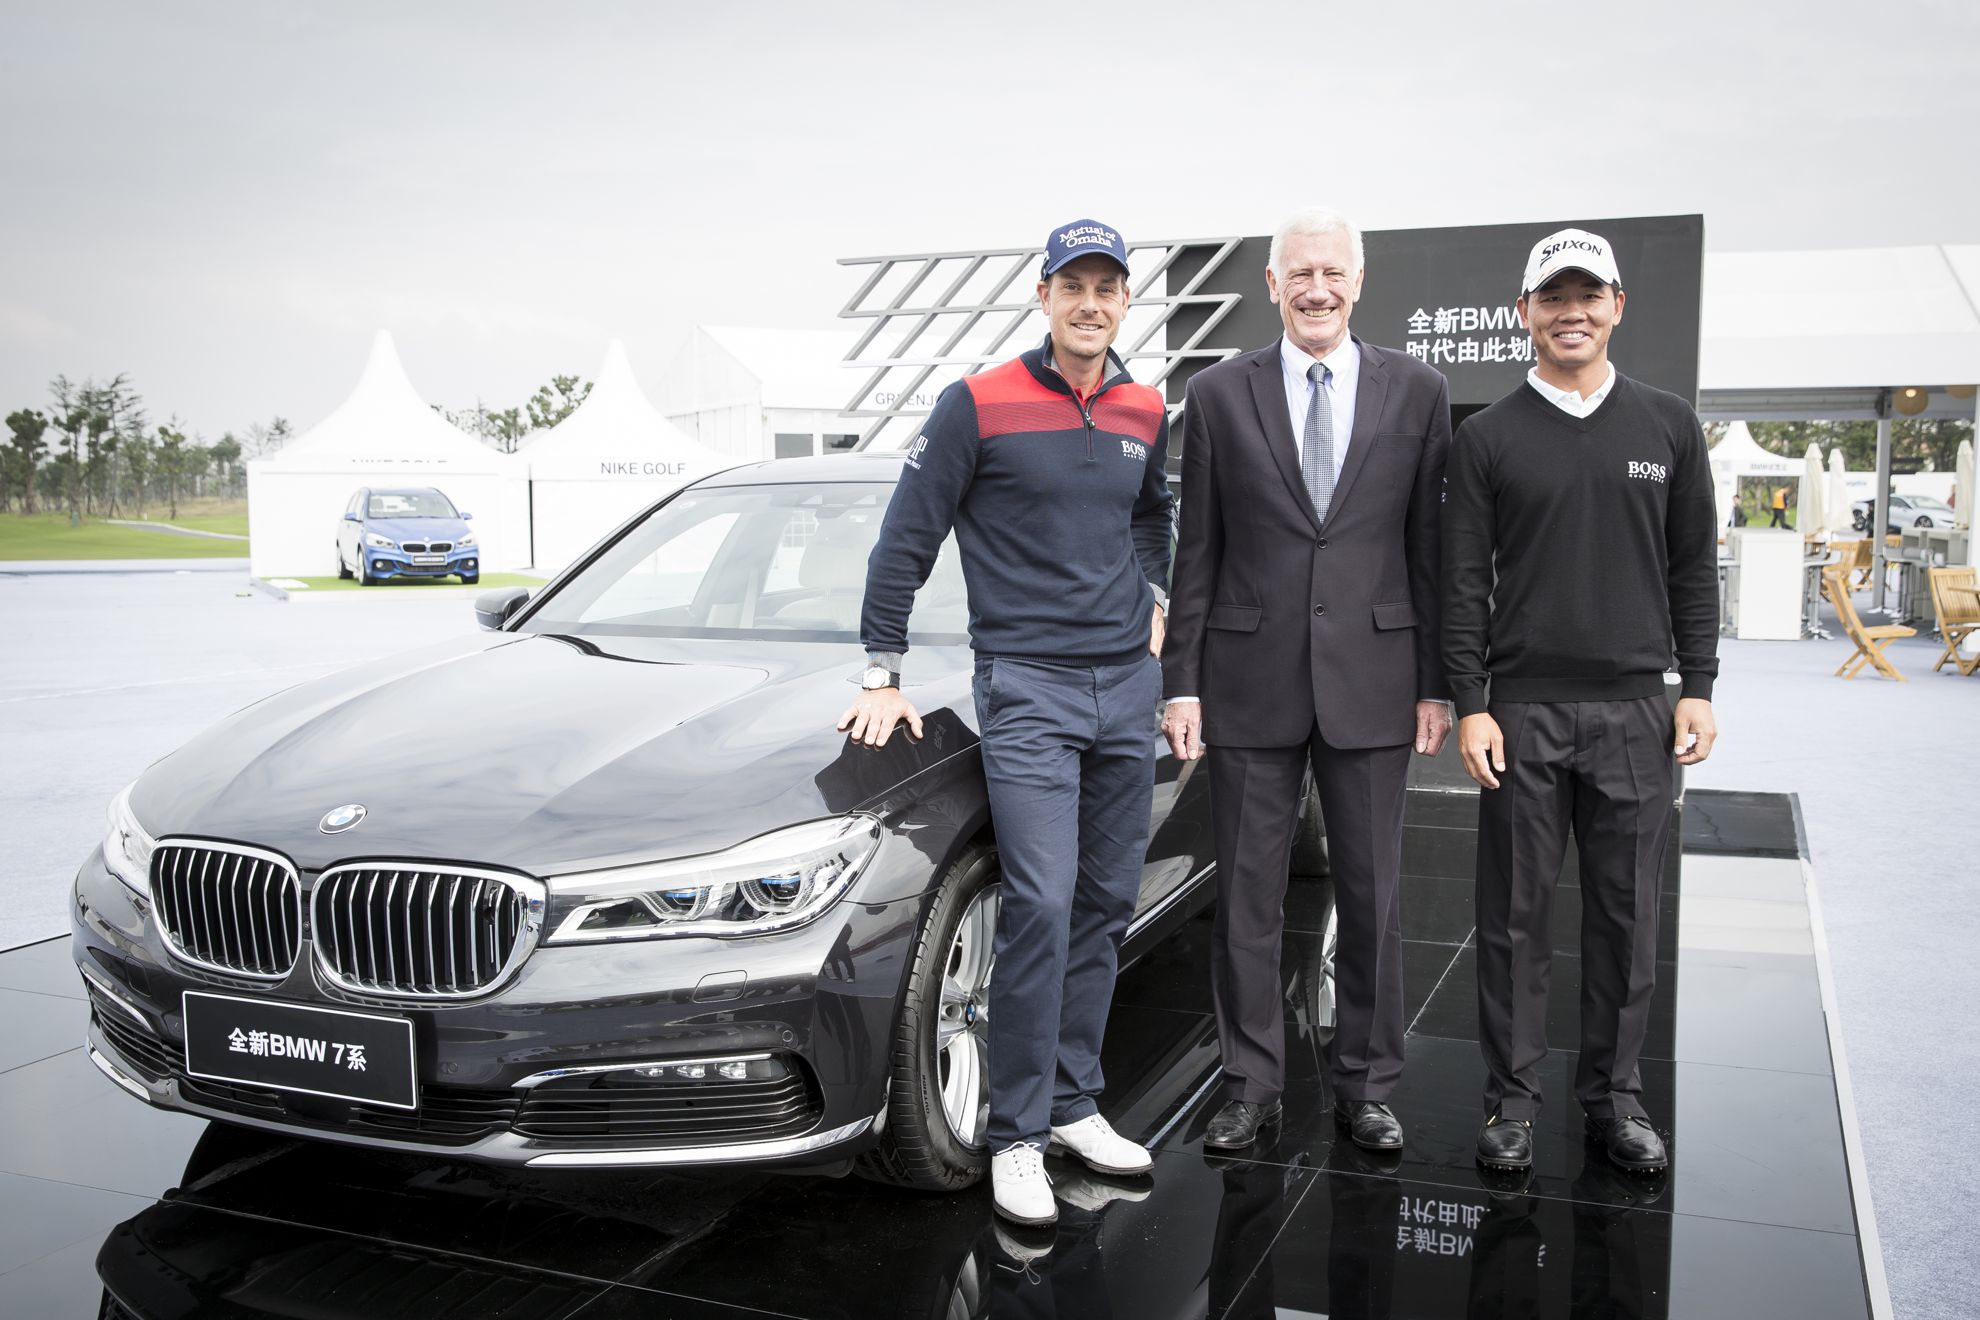 BMW Masters: Kick off for the third European Tour Final